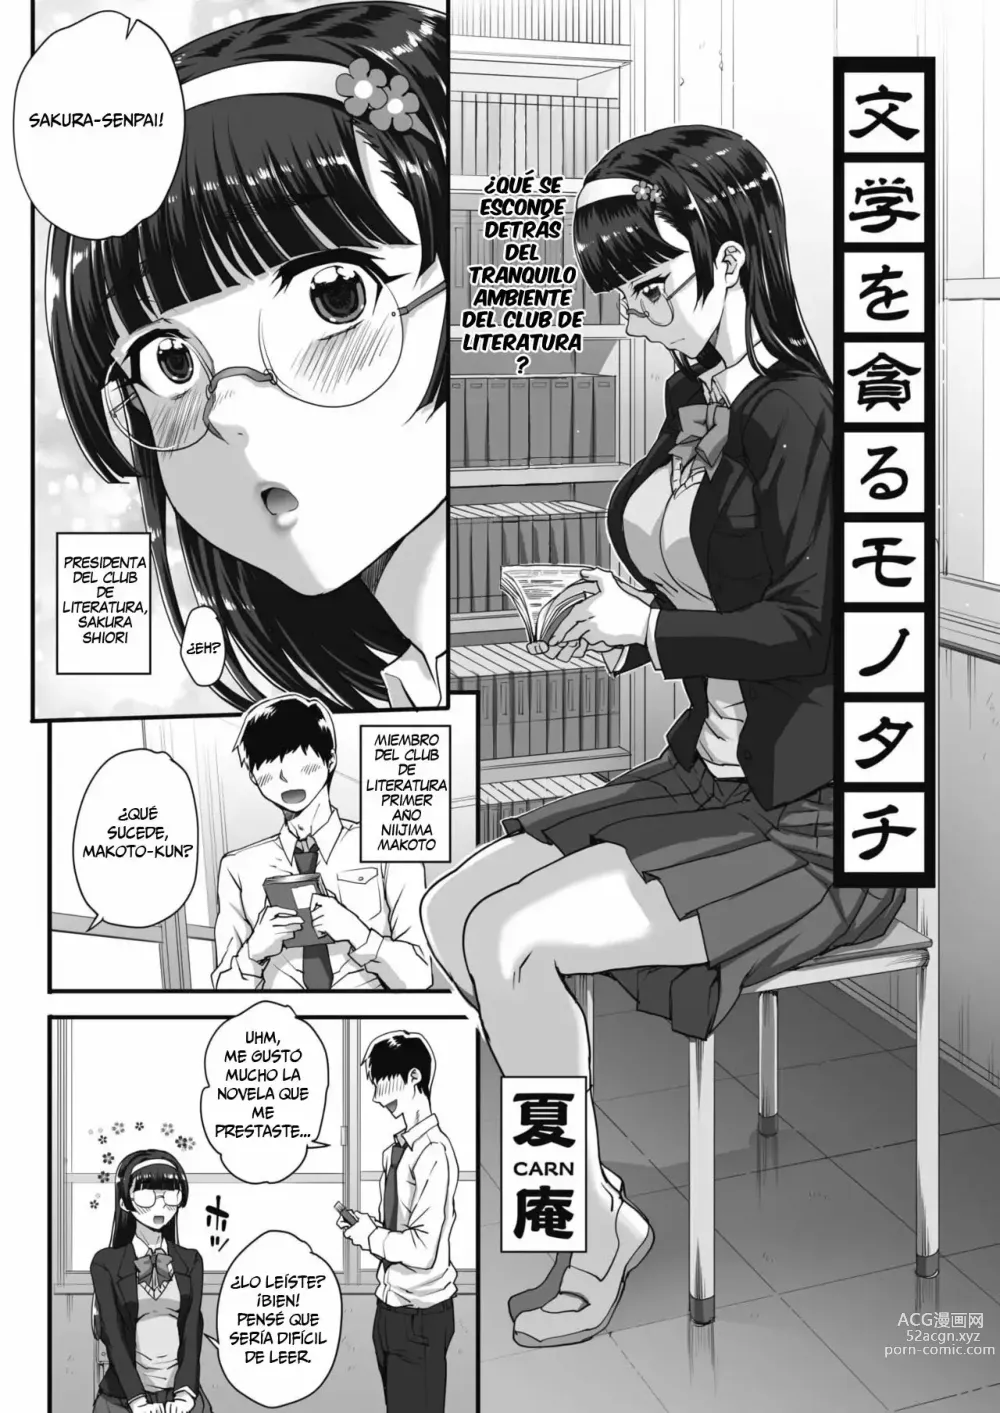 Page 2 of manga Bungaku o musaboru monotachi Ch. 0-4